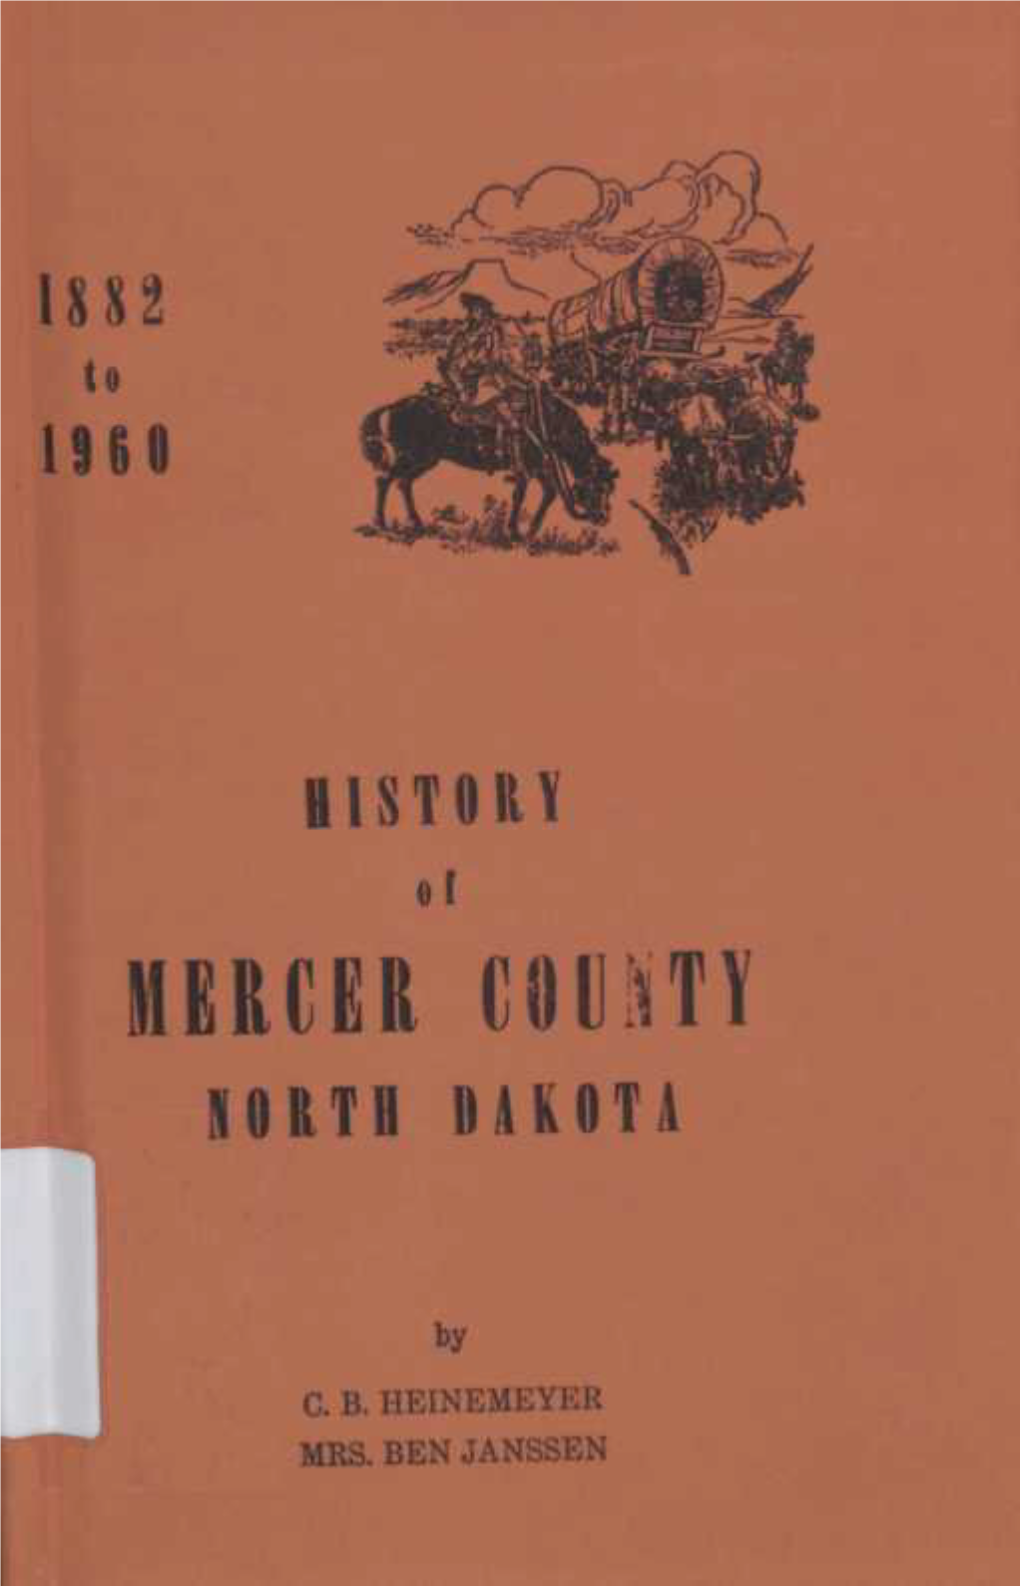 Mercer County North Dakota